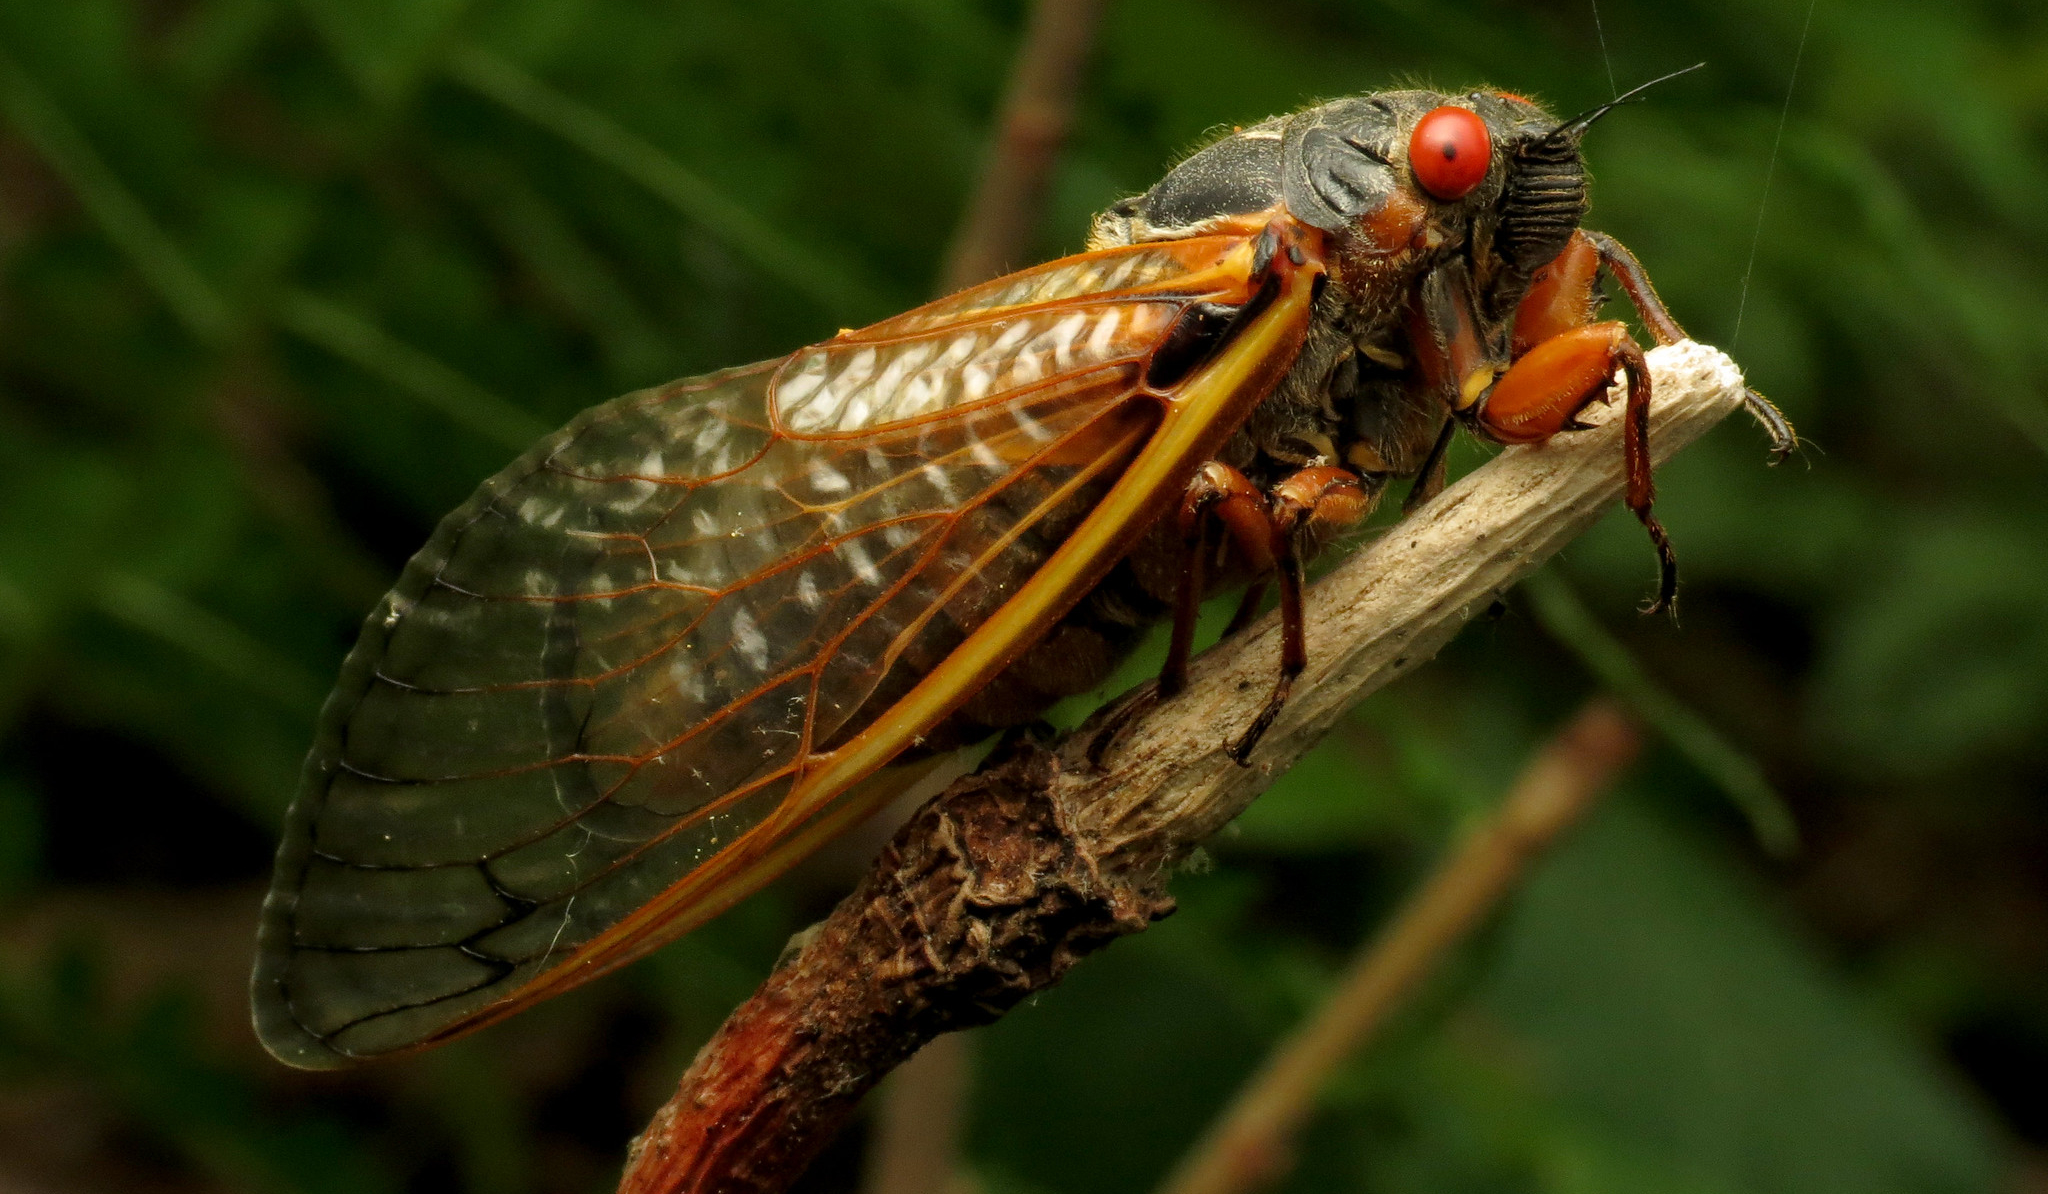 Photo of cicada taken by Katja Shulz; https://flickr.com/photos/86548370@N00/34795761016